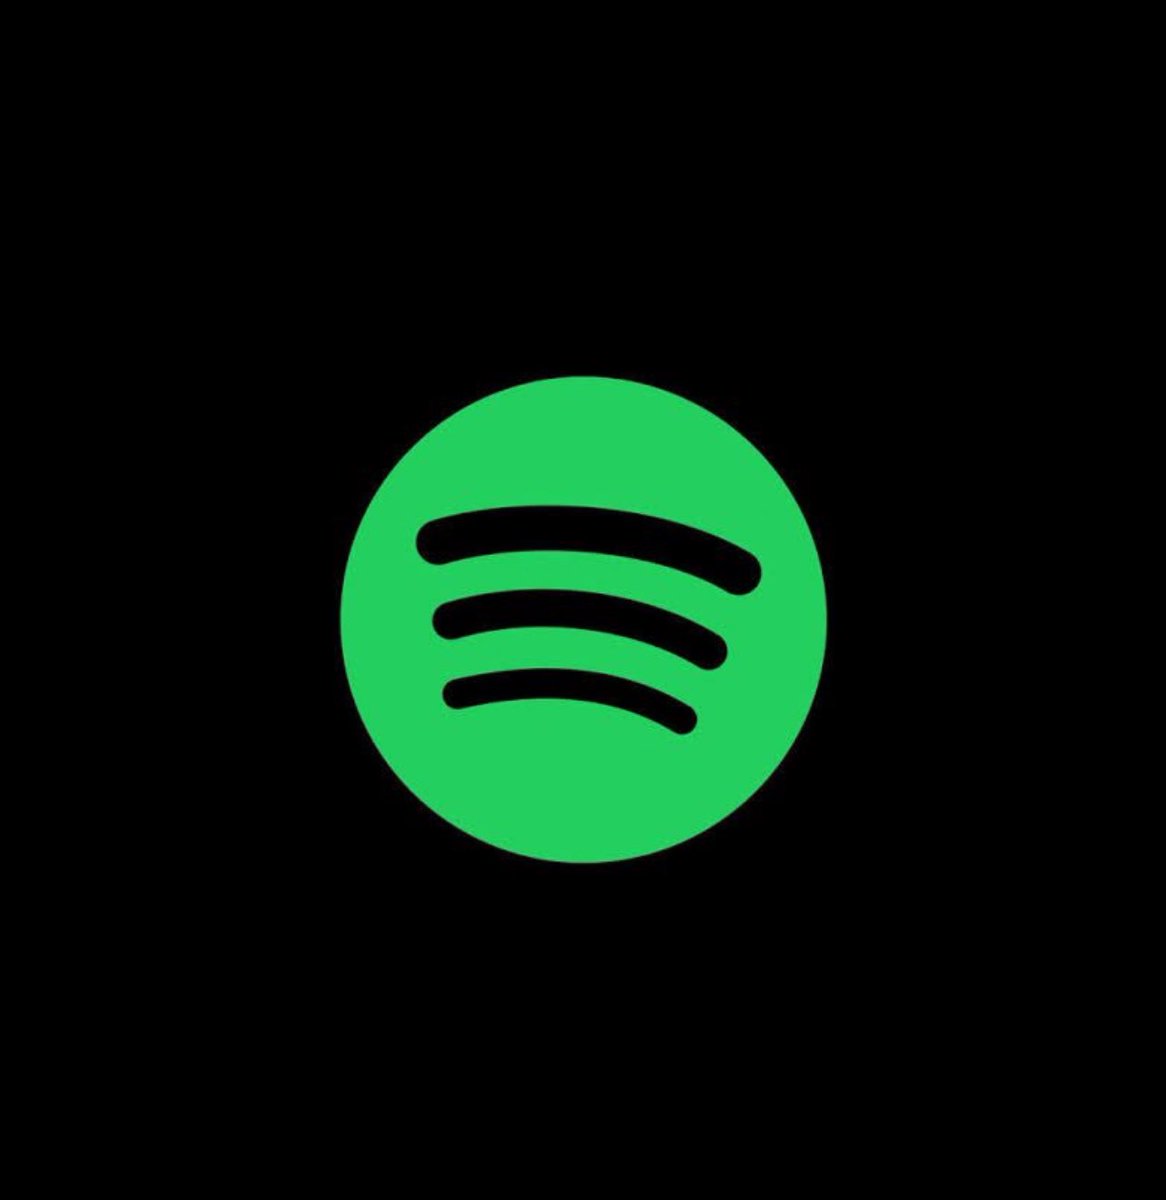 .@wizkidayo “S2” EP on Spotify; *Ololufe - 13,625,560 streams *Diamonds - 10,202,510 streams *Energy - 5,690,805 streams *IDK - 17,581,083 streams —S2 EP now surpassed 47M+ streams on Spotify, it’s also the first 2023 EP to have (3) songs surpassed 10M streams.